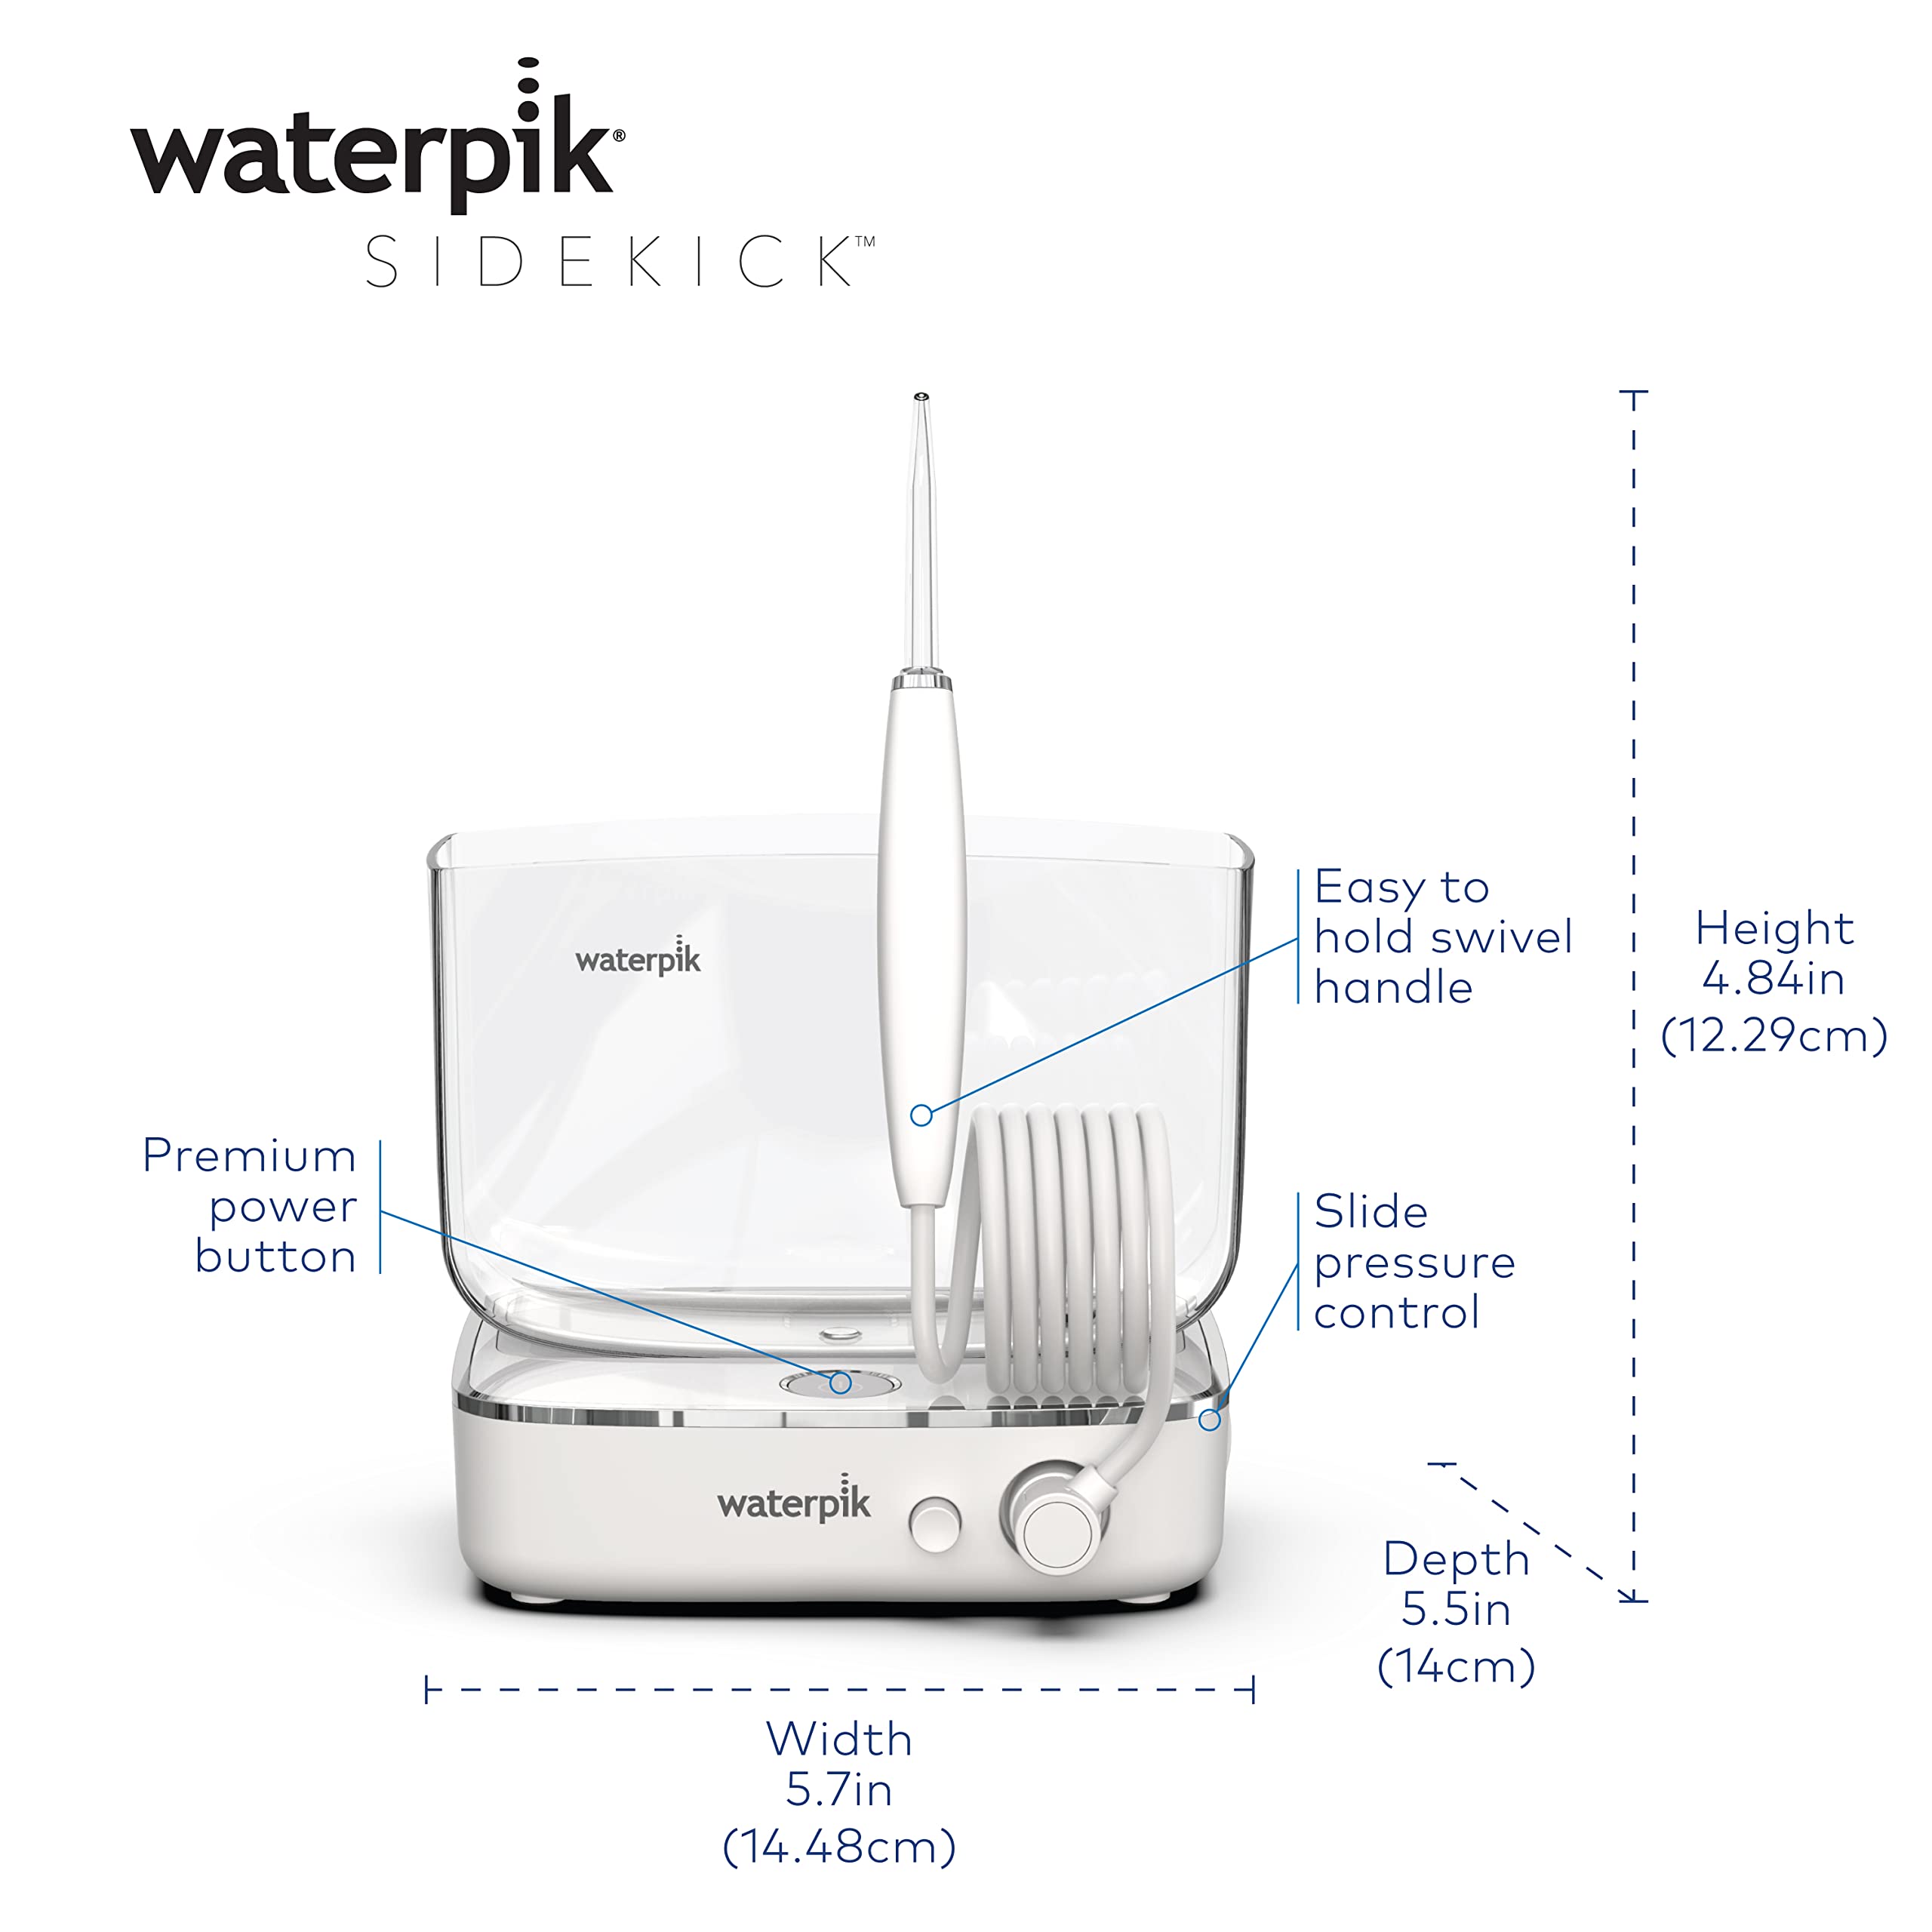 Waterpik Sidekick Portable Water Flosser Perfect for Travel & Home, White/Chrome